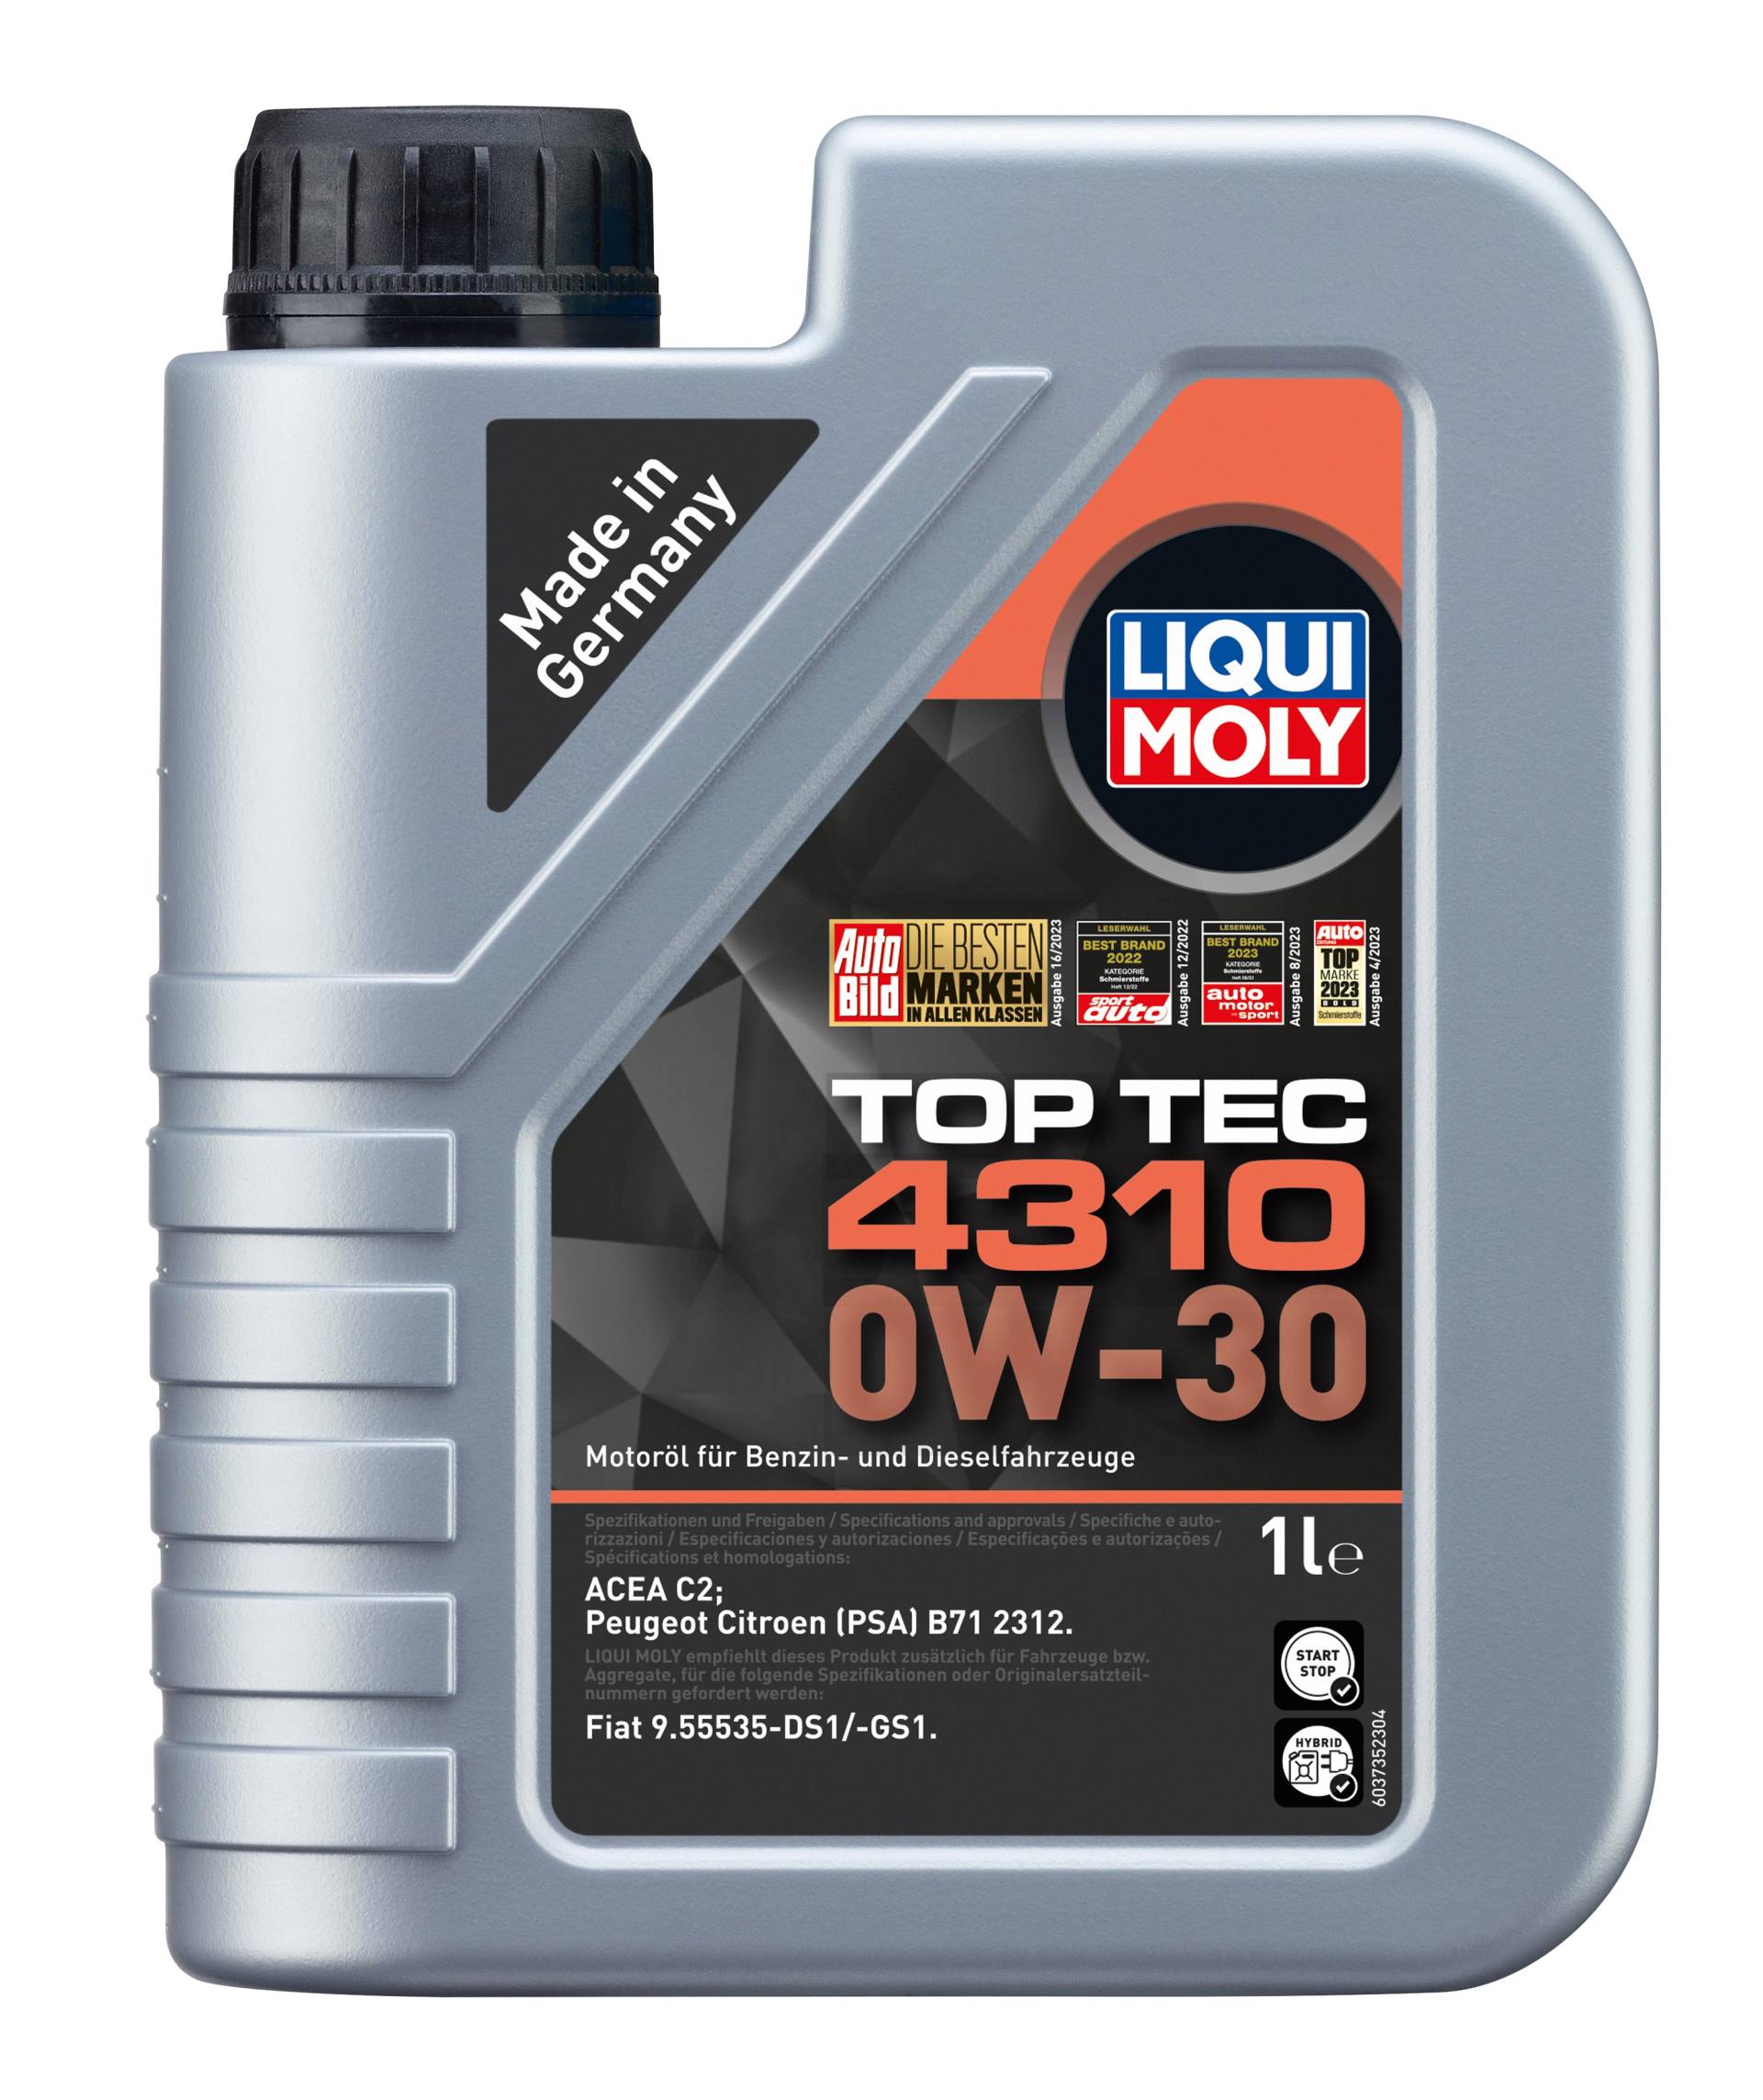 Liqui Moly TopTec 4310 0W-30 Motoröl, 1 Liter von Liqui Moly